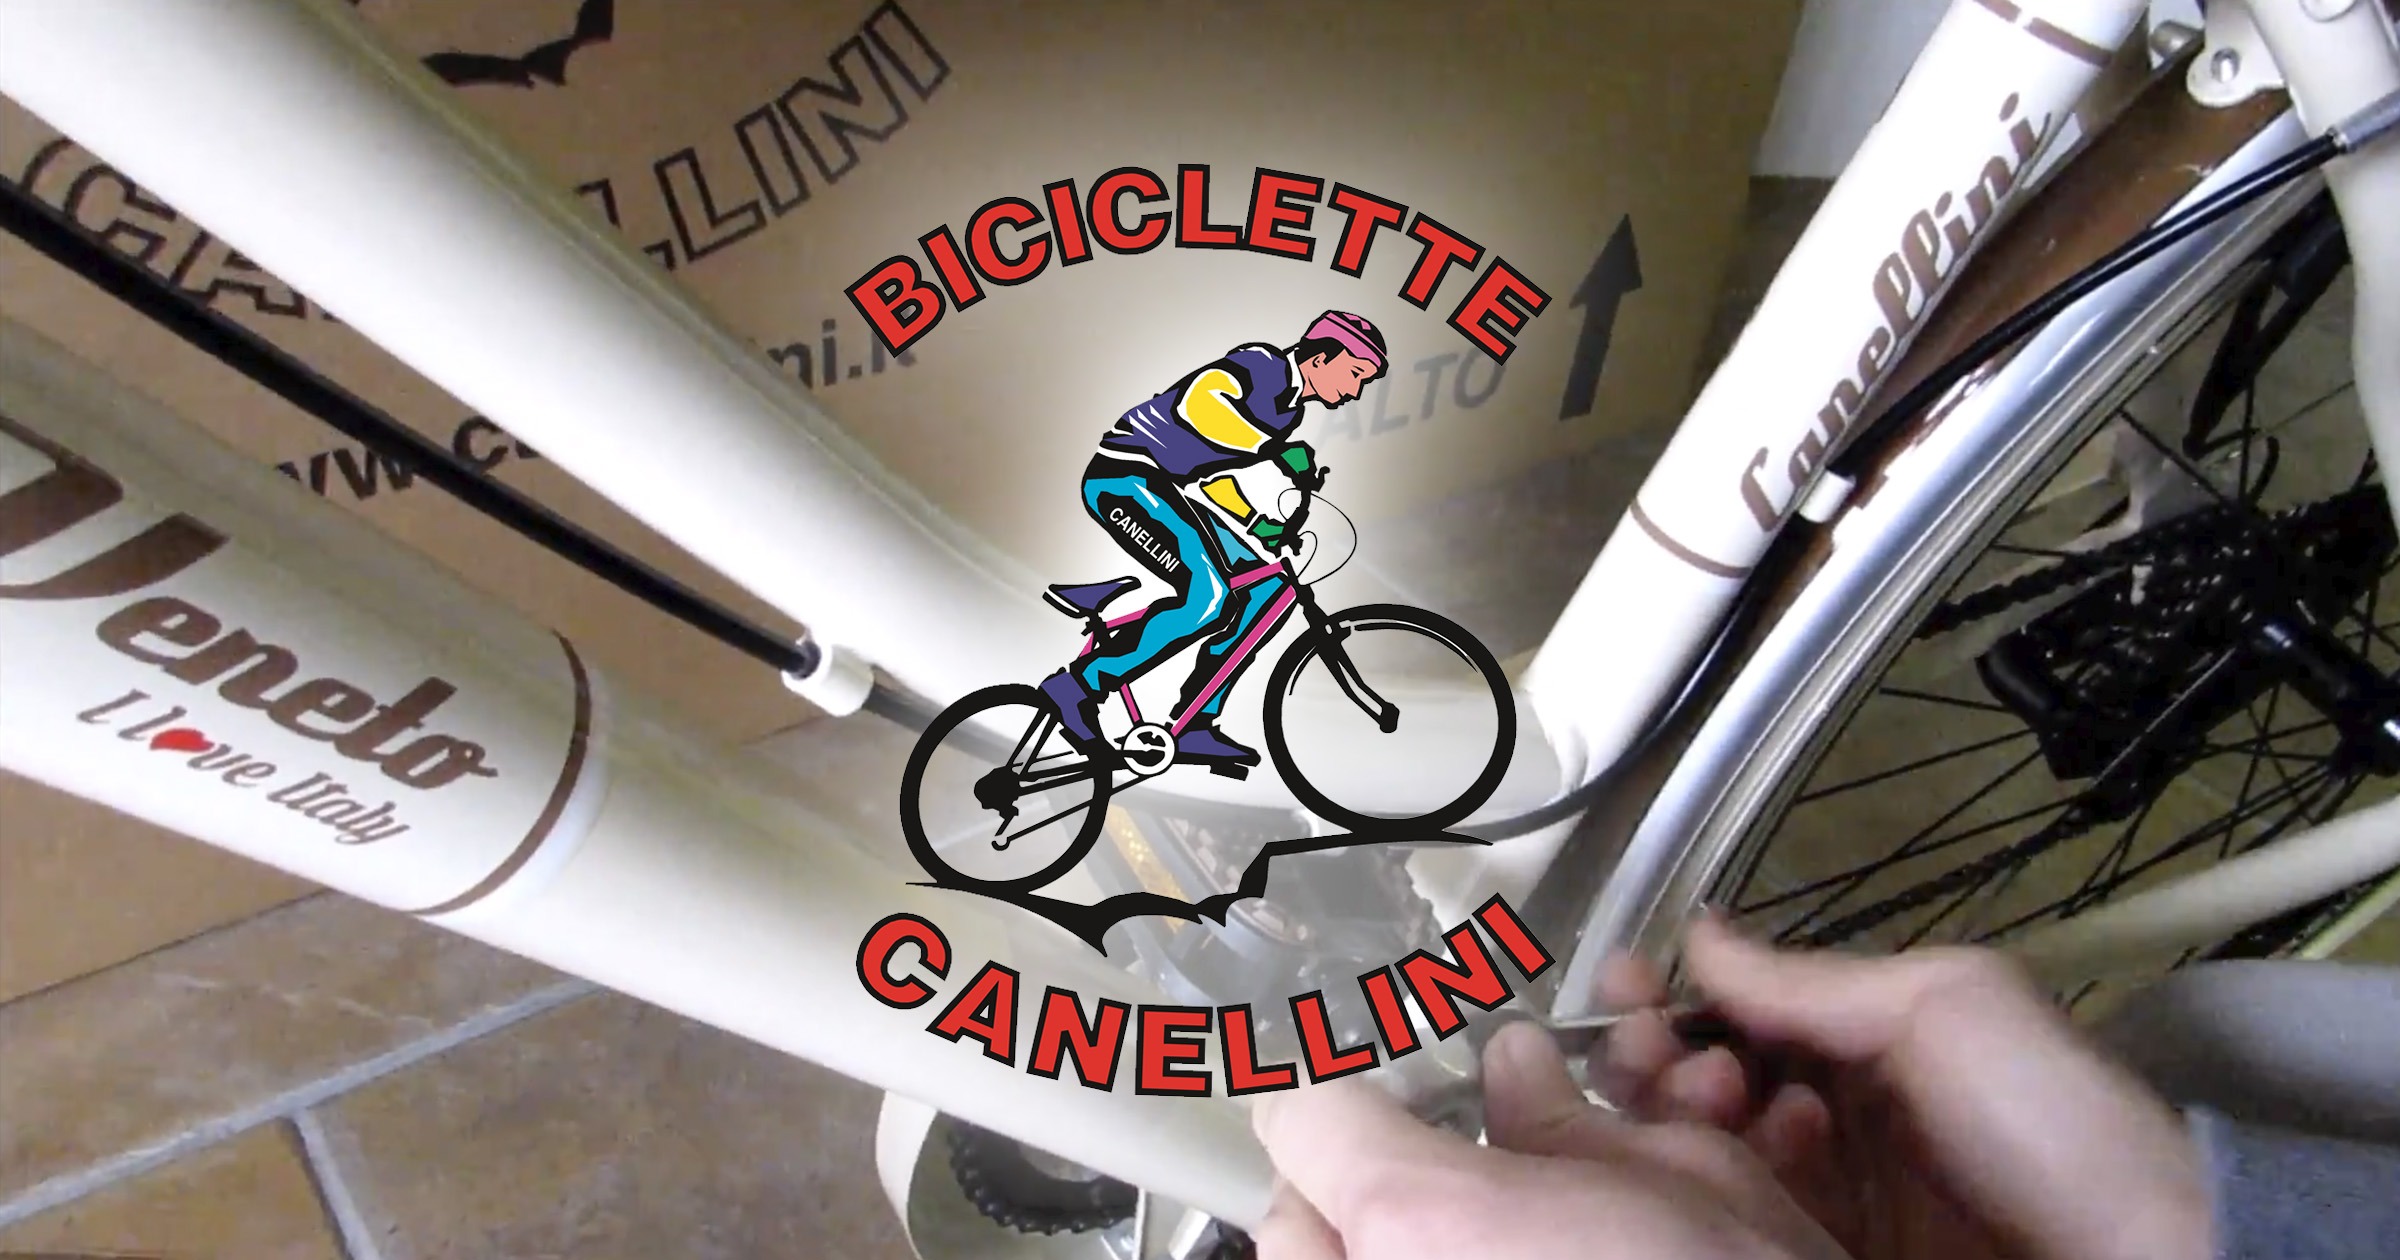 via veneto by canellini bicycle